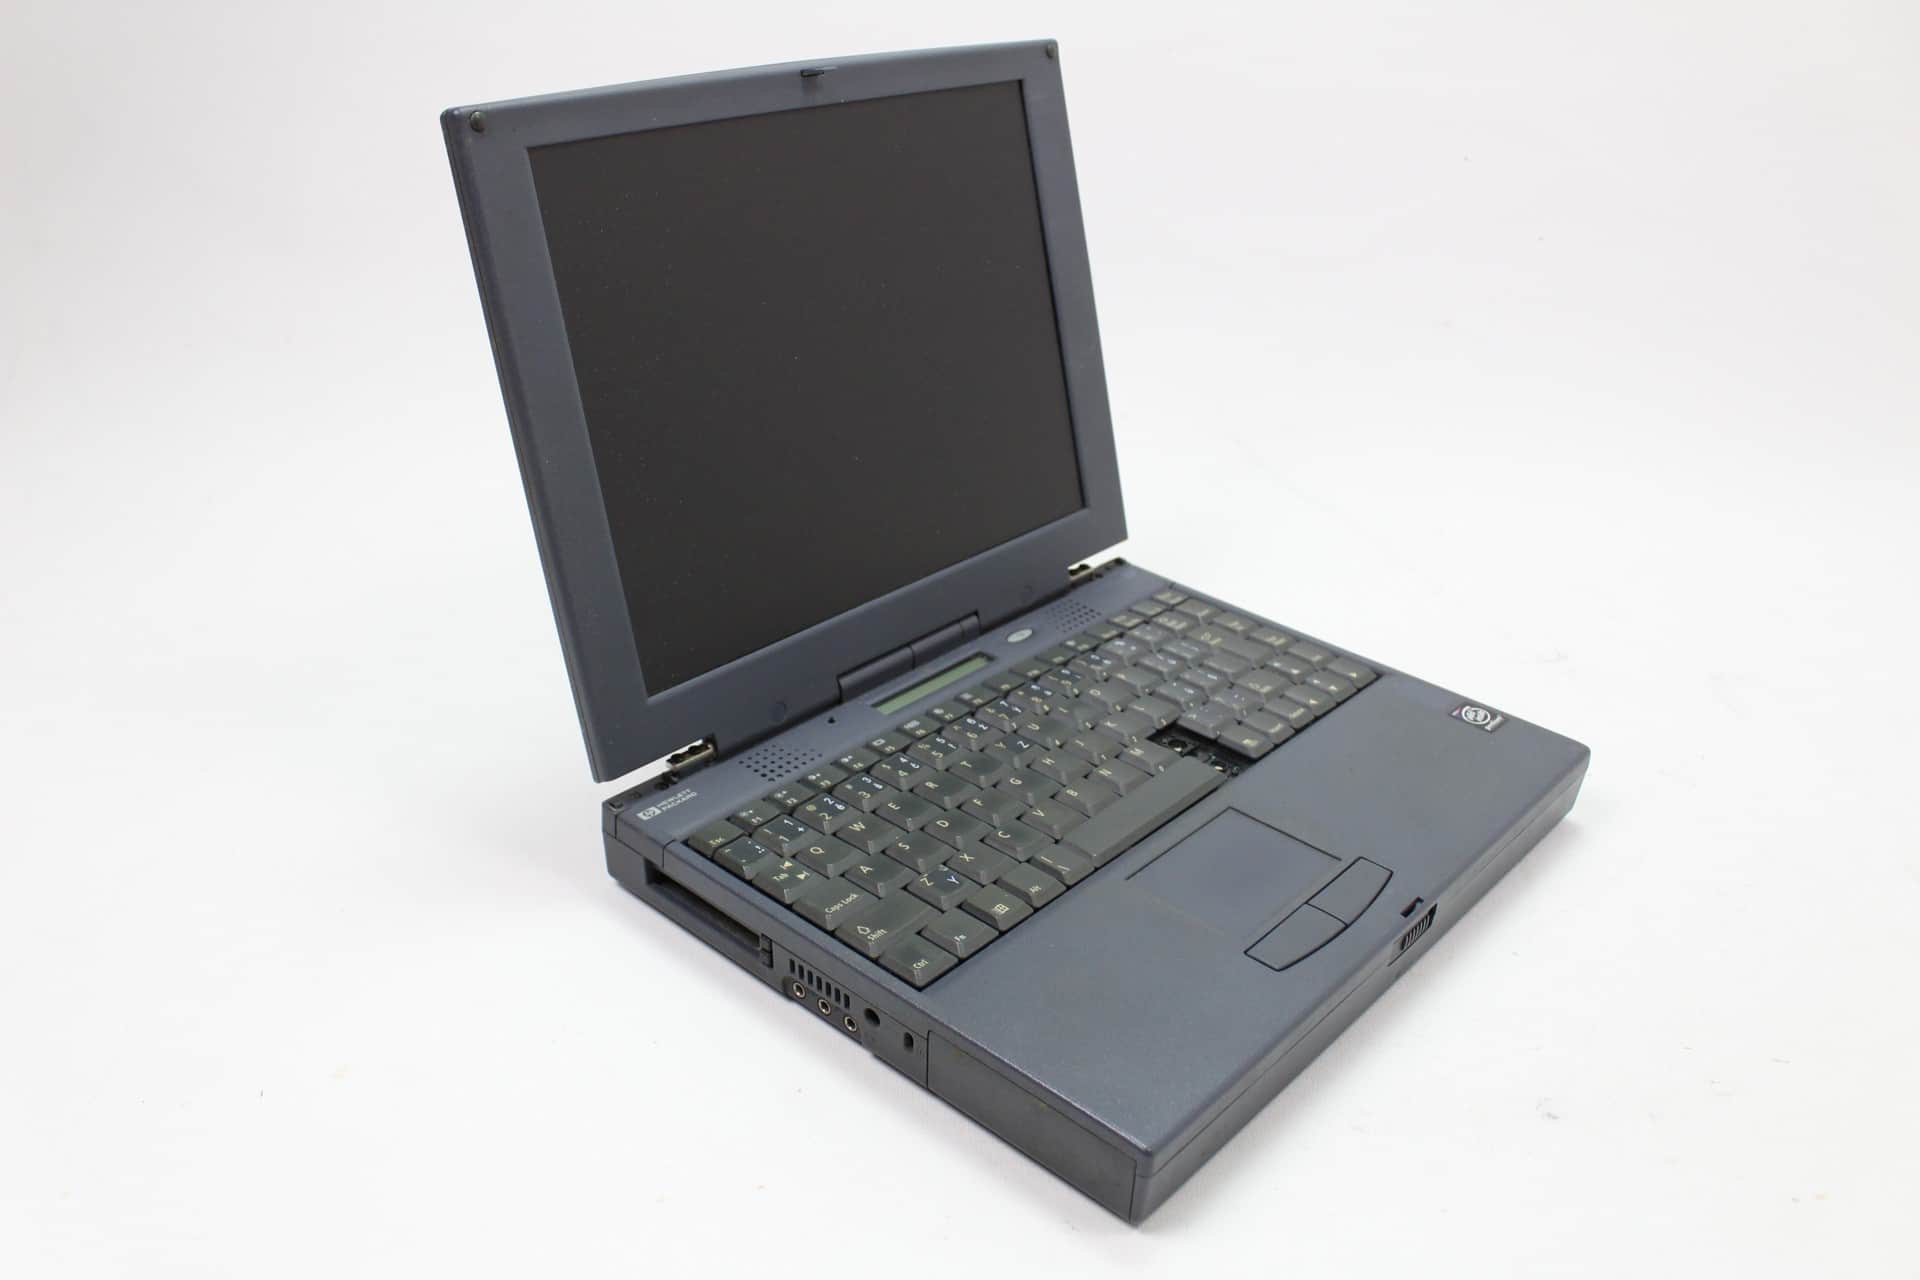 Hewlett Packard OmniBook 2100 - Otevřený zleva